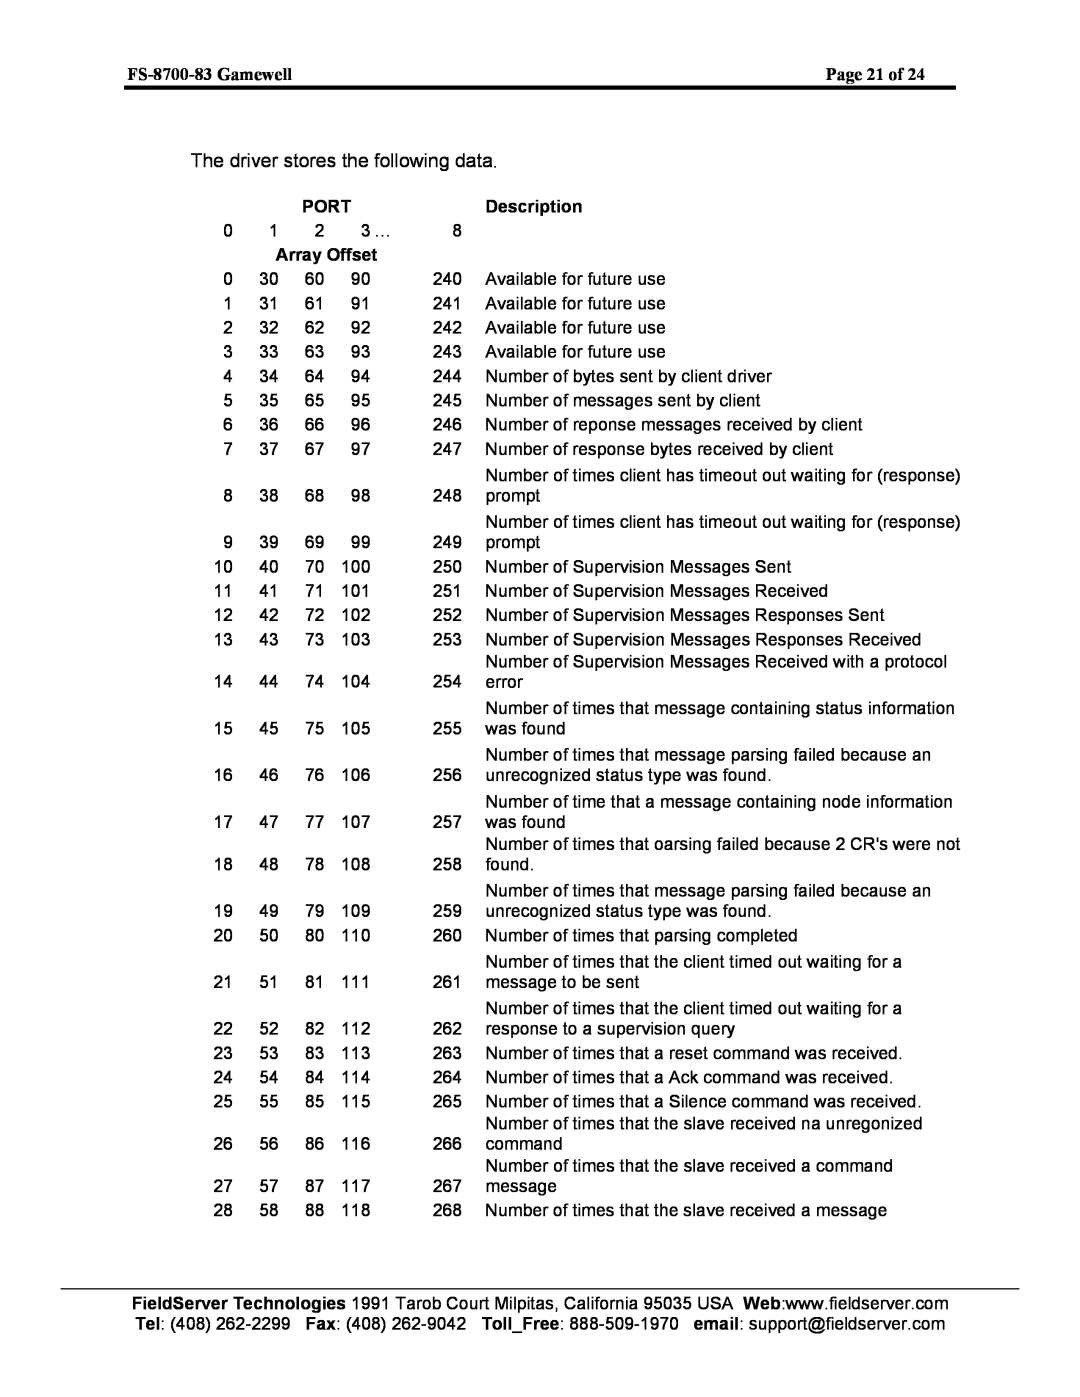 FieldServer instruction manual FS-8700-83 Gamewell, Page 21 of, Port, Description, Array Offset 